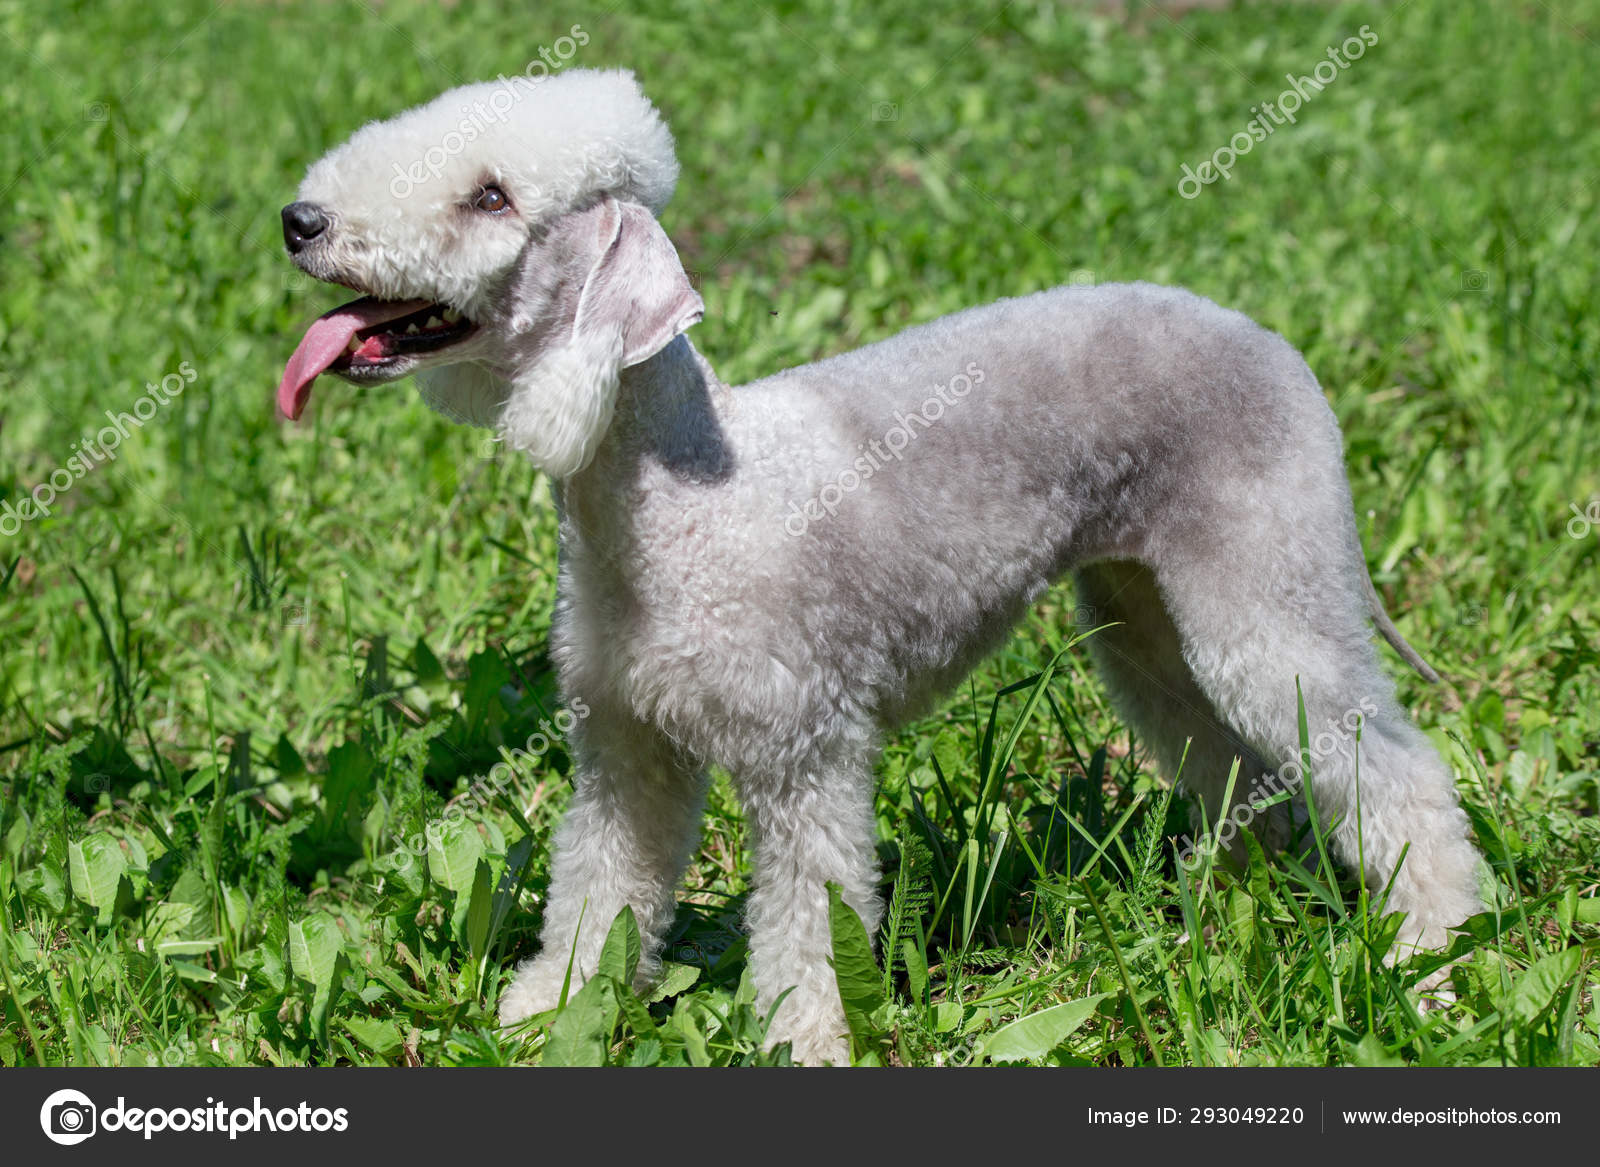 🐾 Bedlington Terrier - 